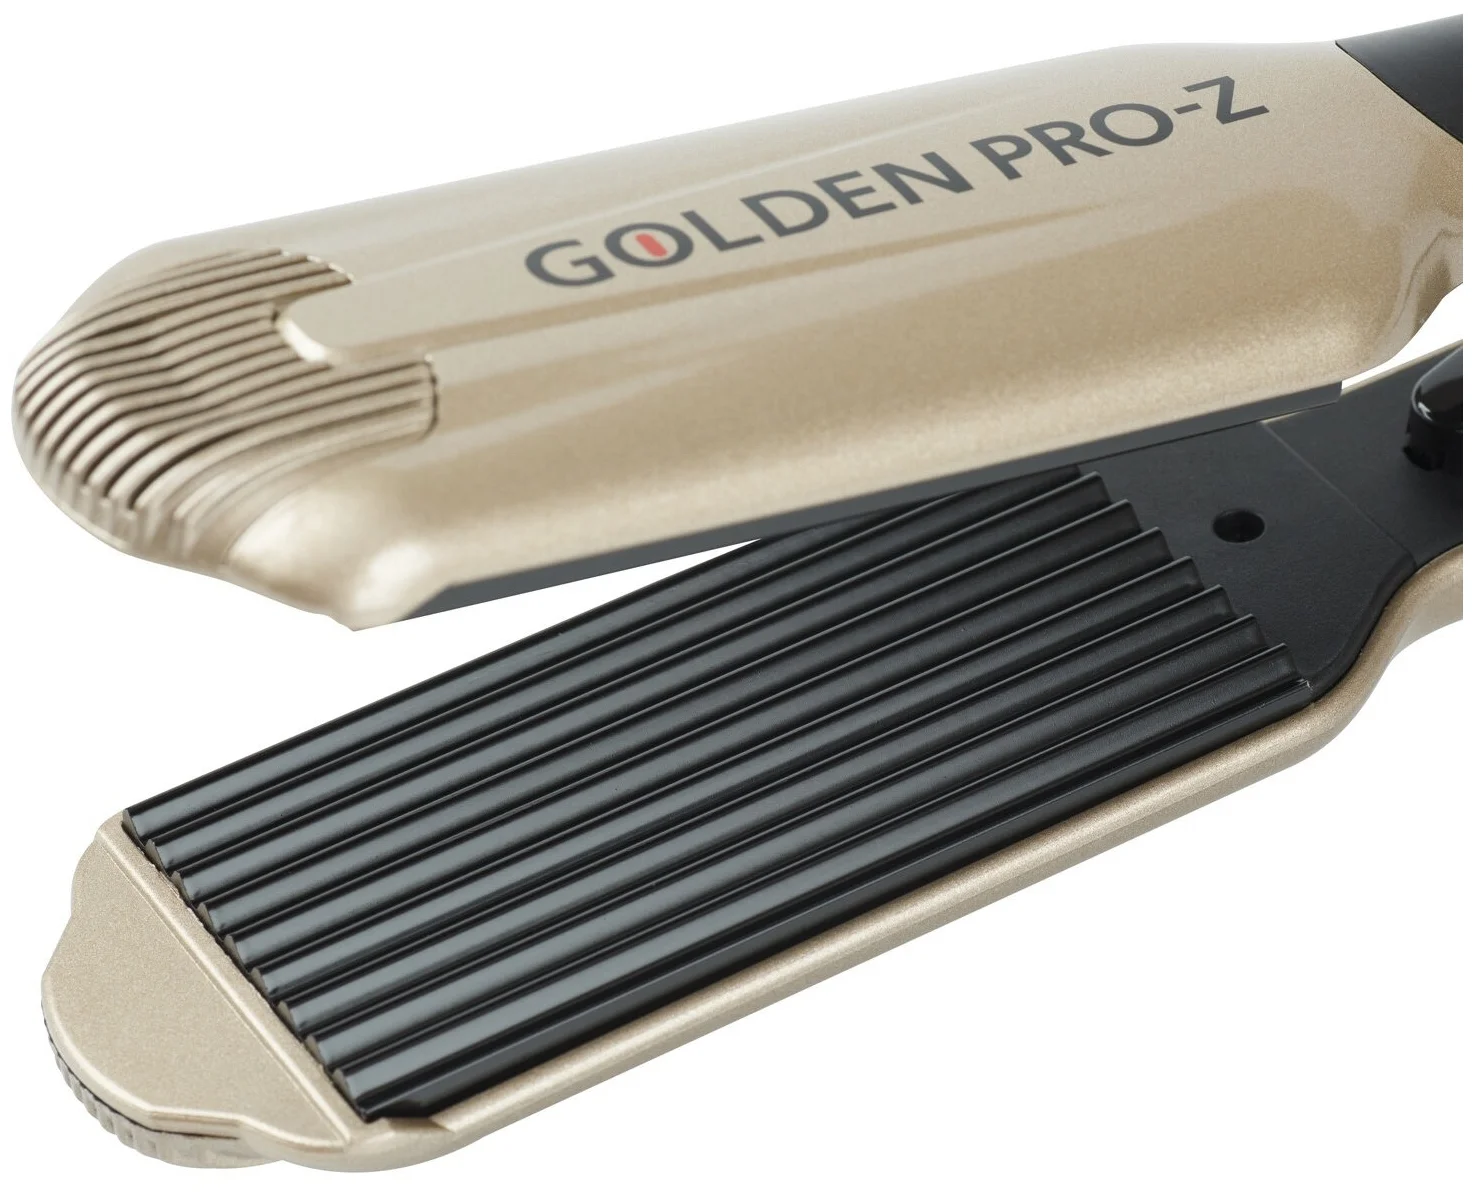 DEWAL 03-030z Golden Pro-Z - максимальная температура нагрева 230 °C